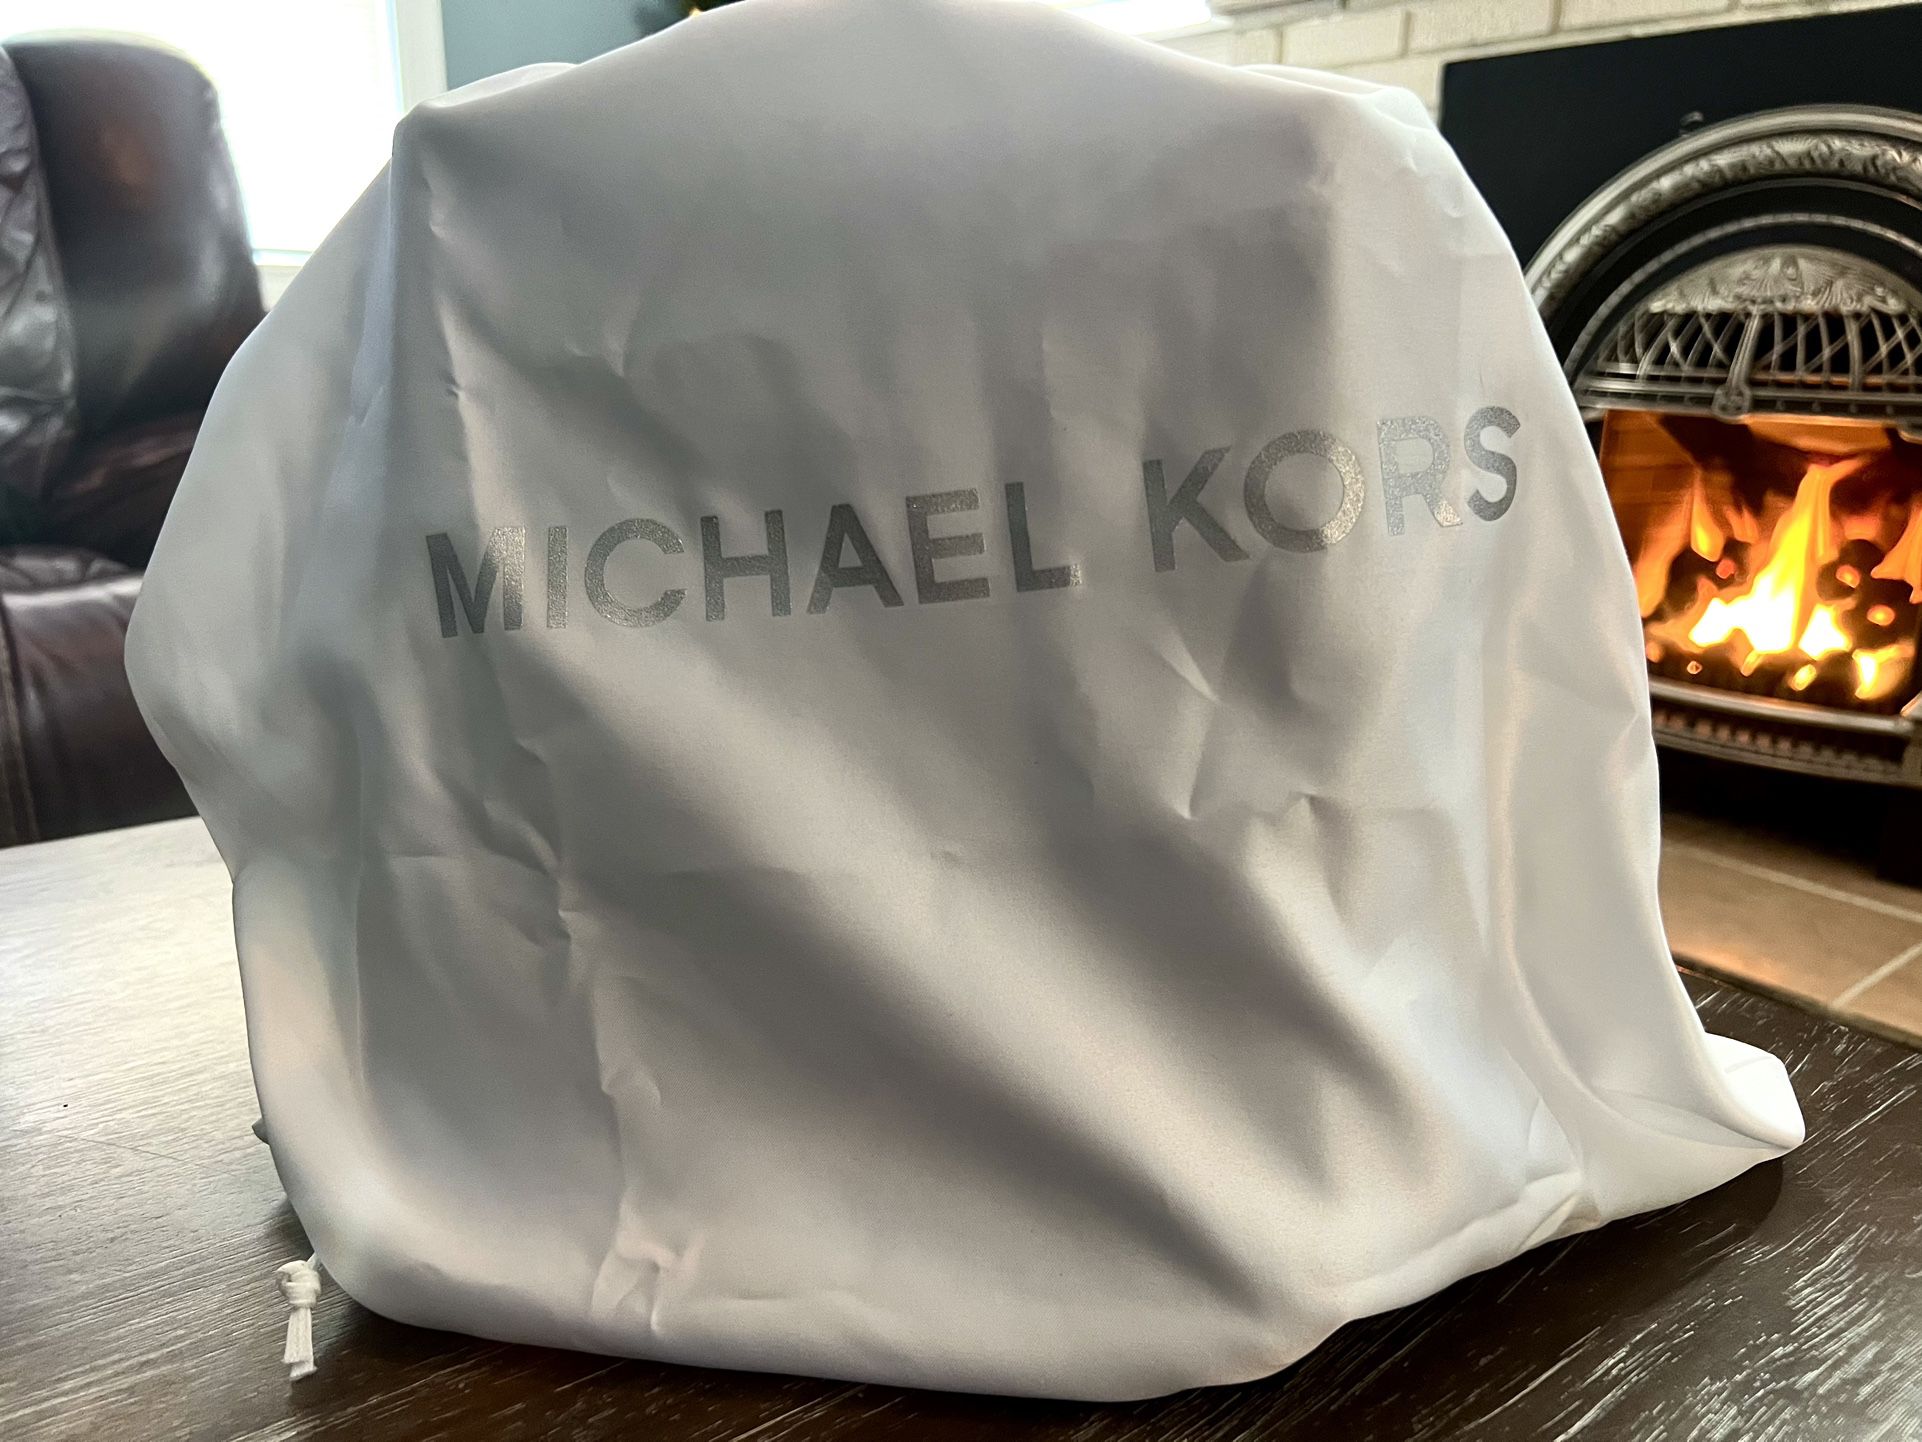 Michael Kors Hamilton Legacy Messenger Bag